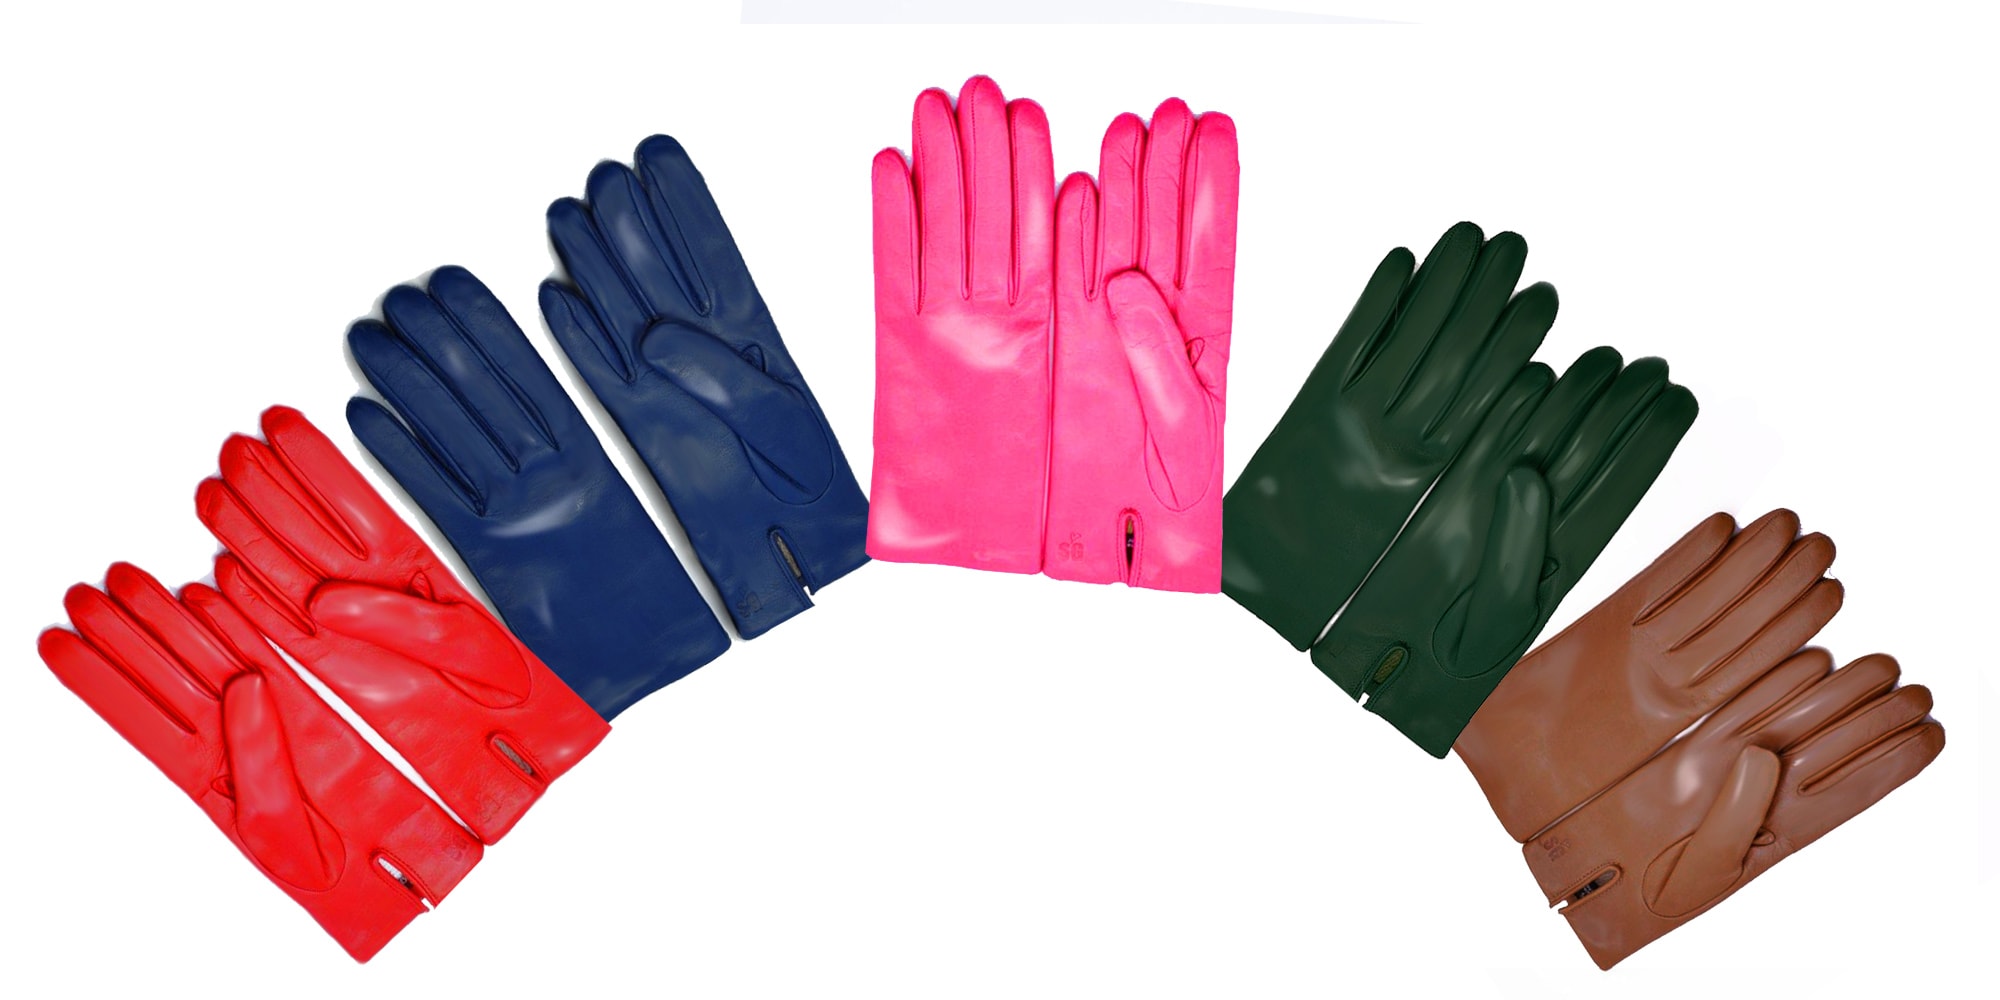 Coloured Leather Gloves by Irish textile designer.